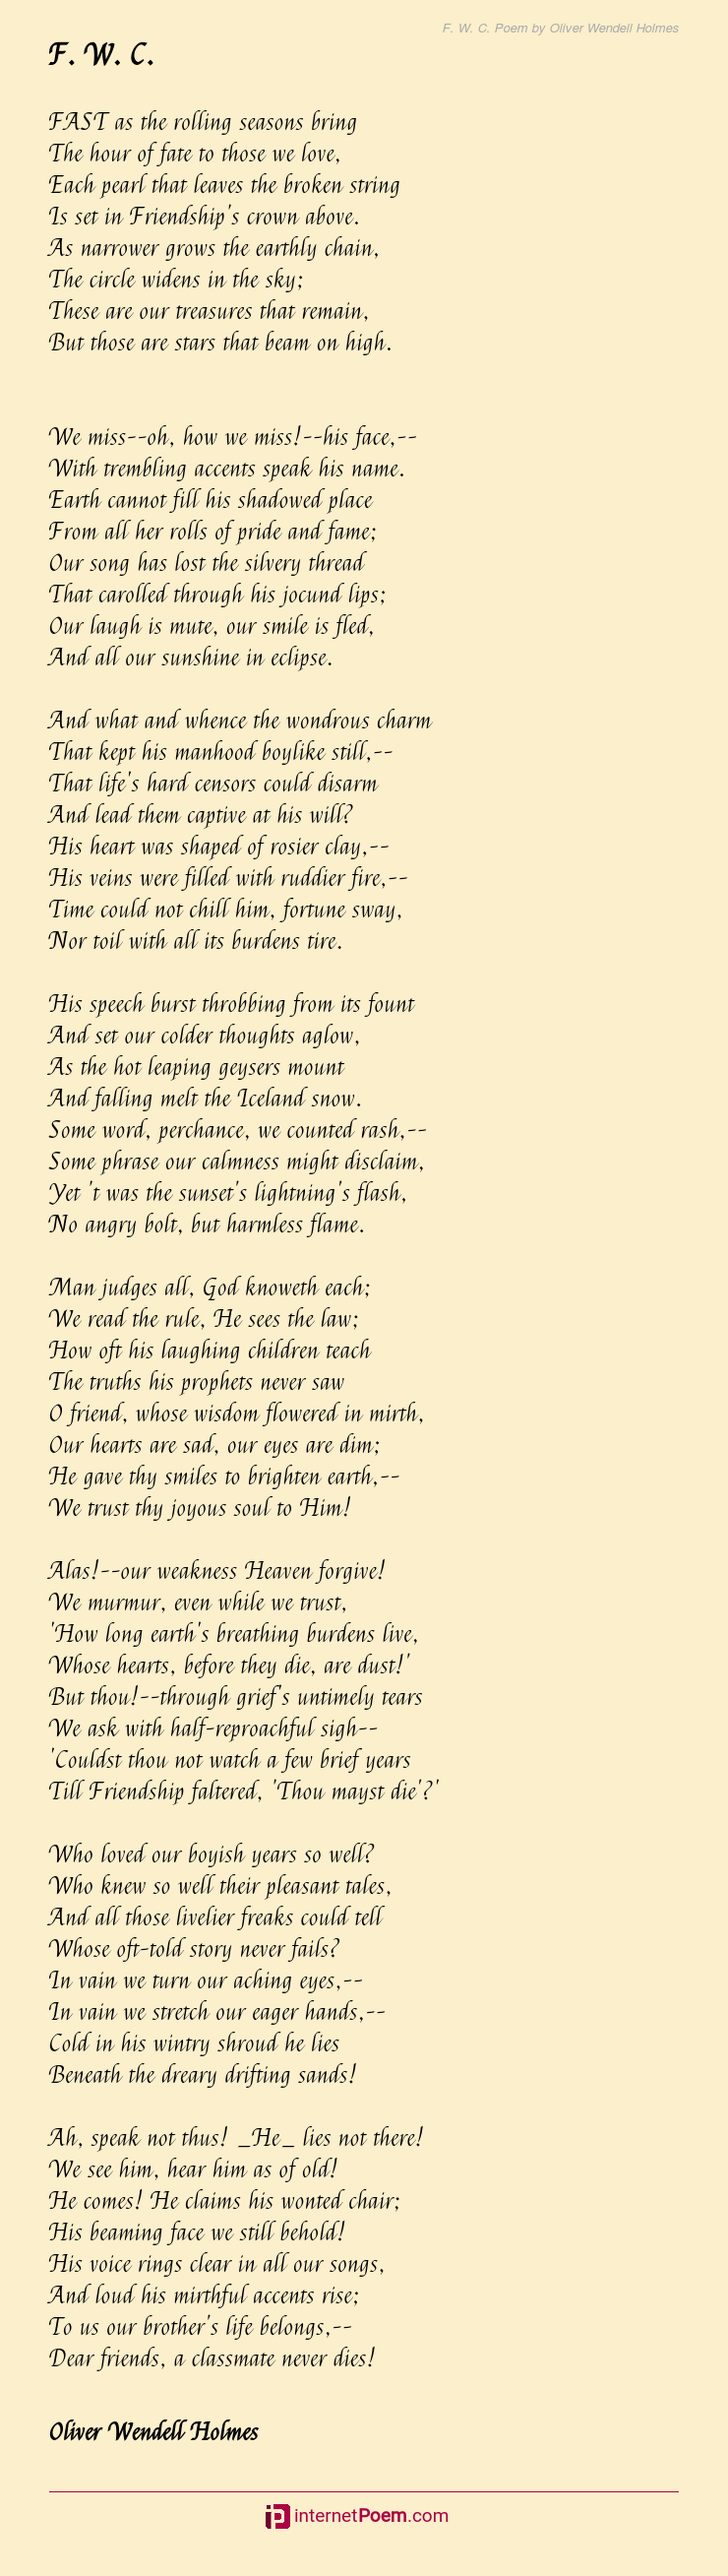 F. W. C. Poem by Oliver Wendell Holmes